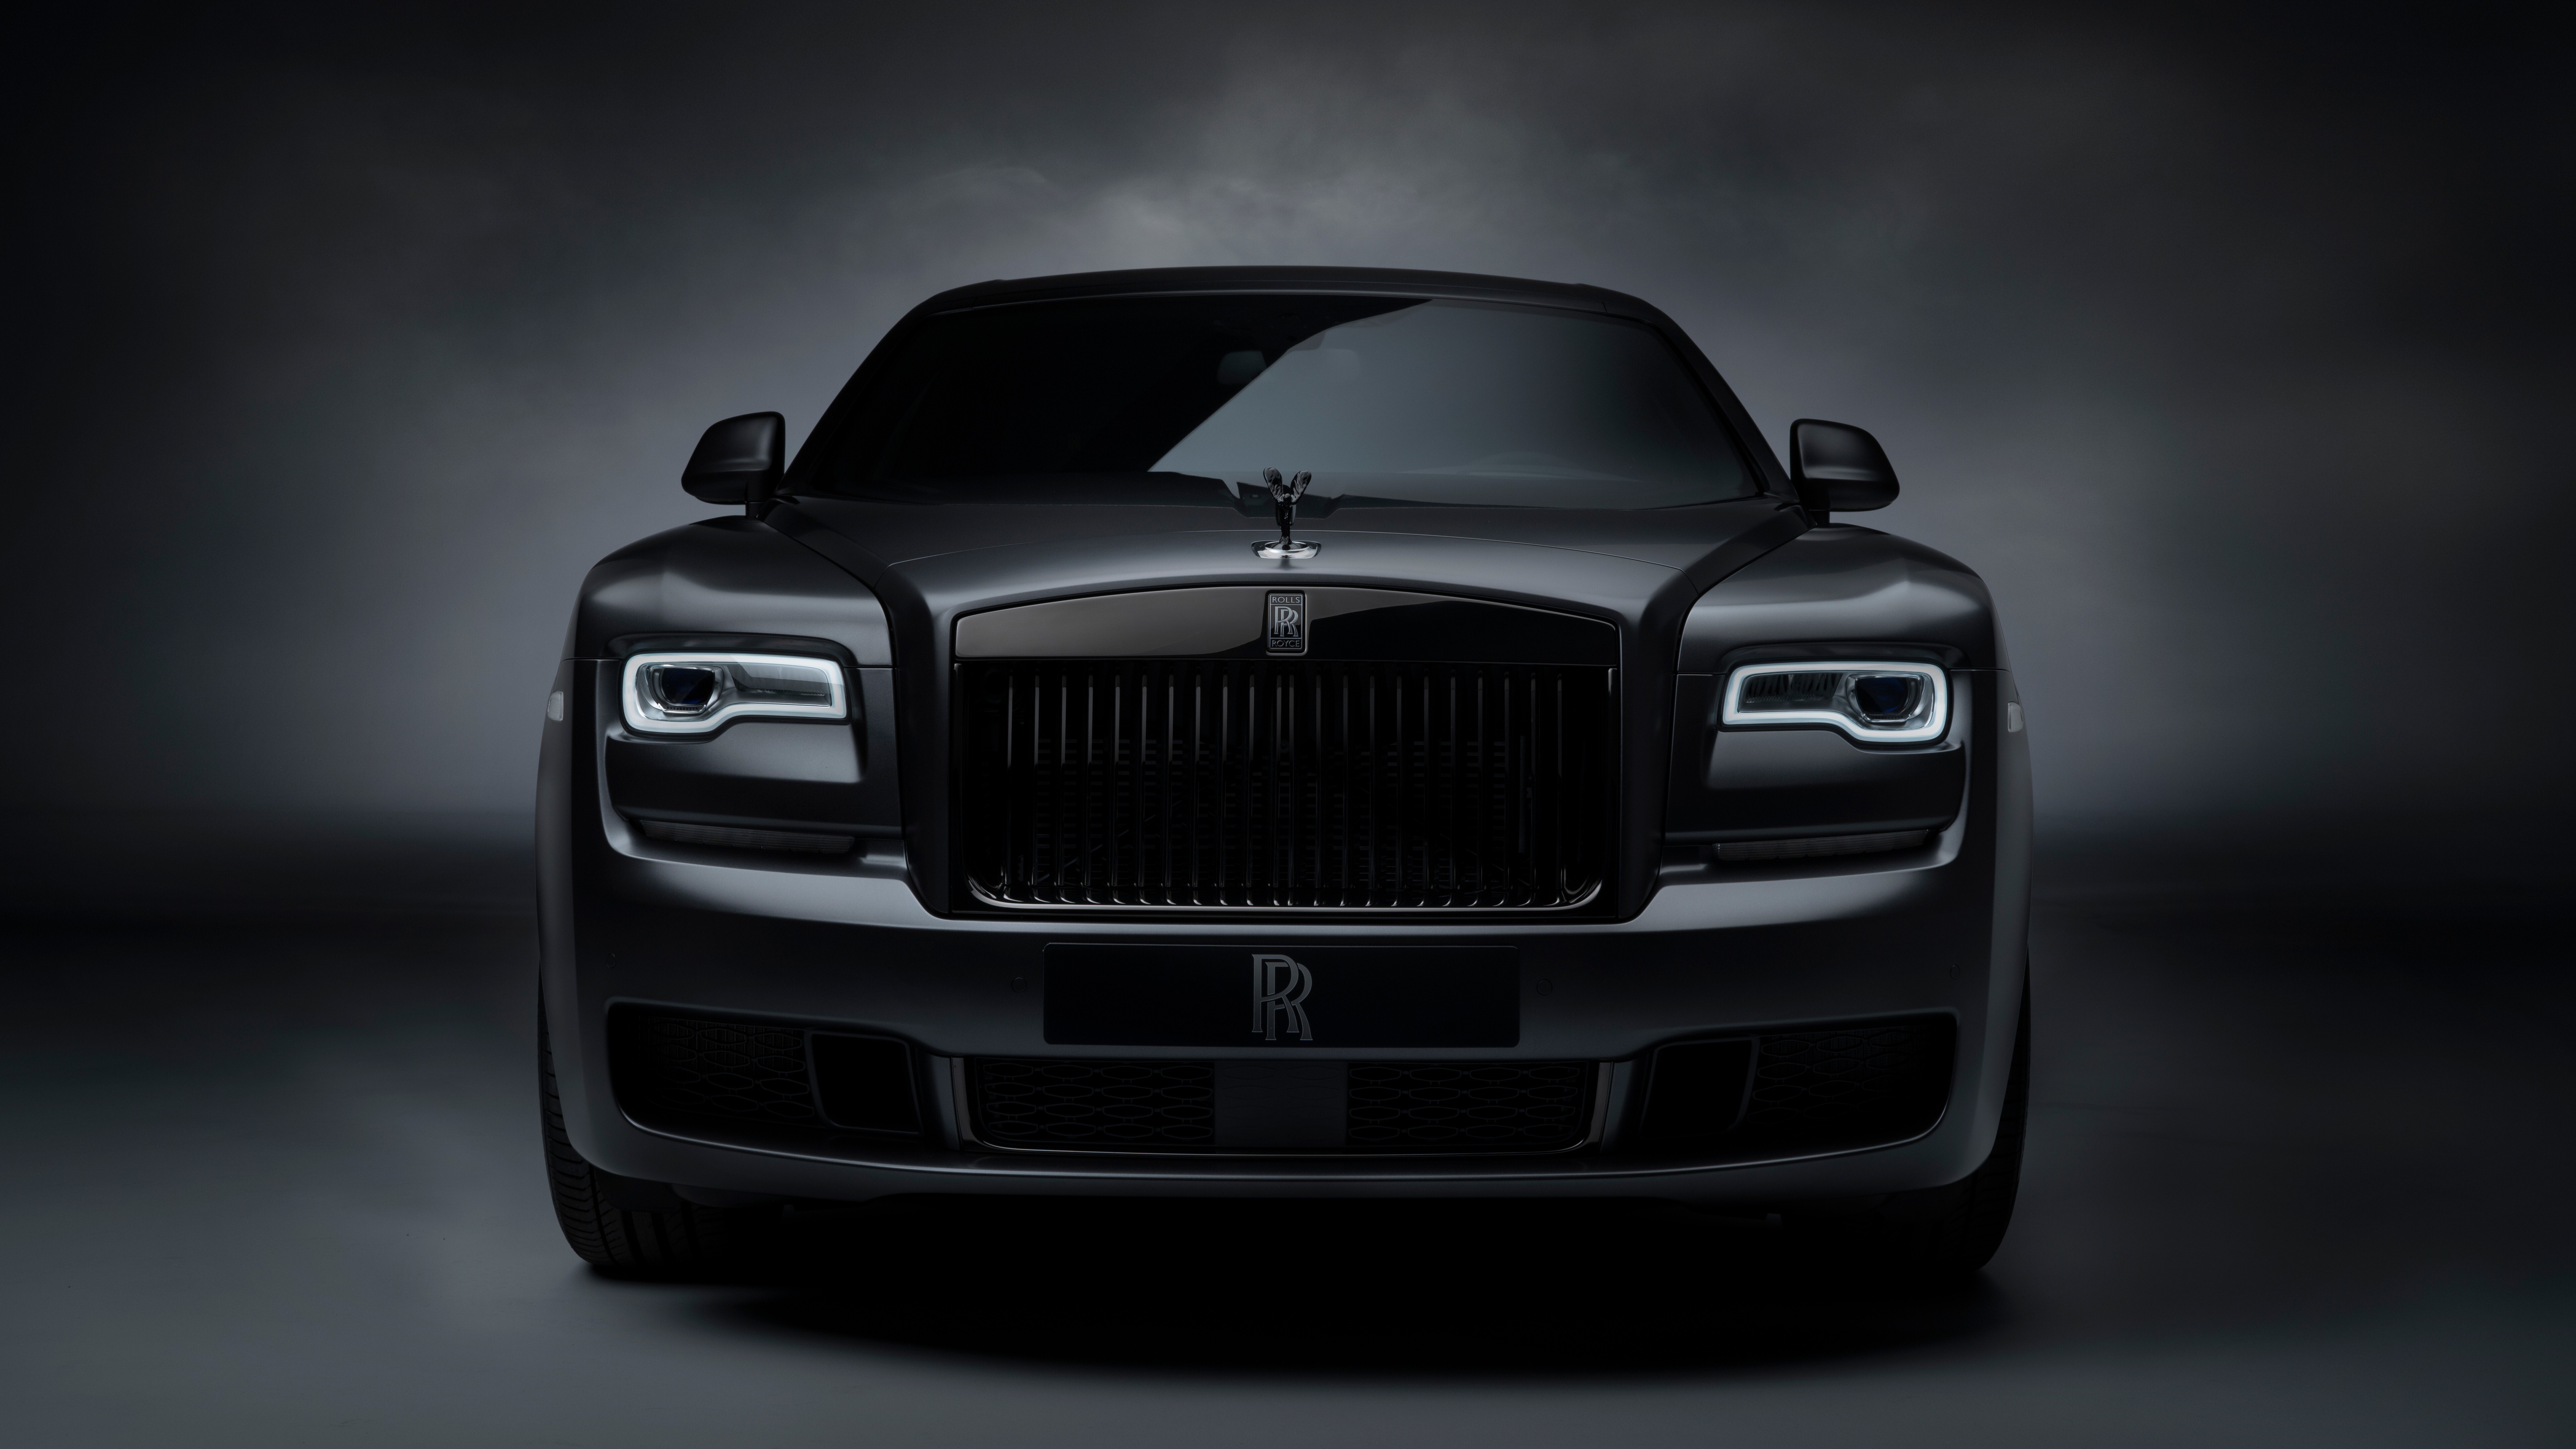 8K Wallpaper of 2019 Rolls Royce Ghost Black Badge Car